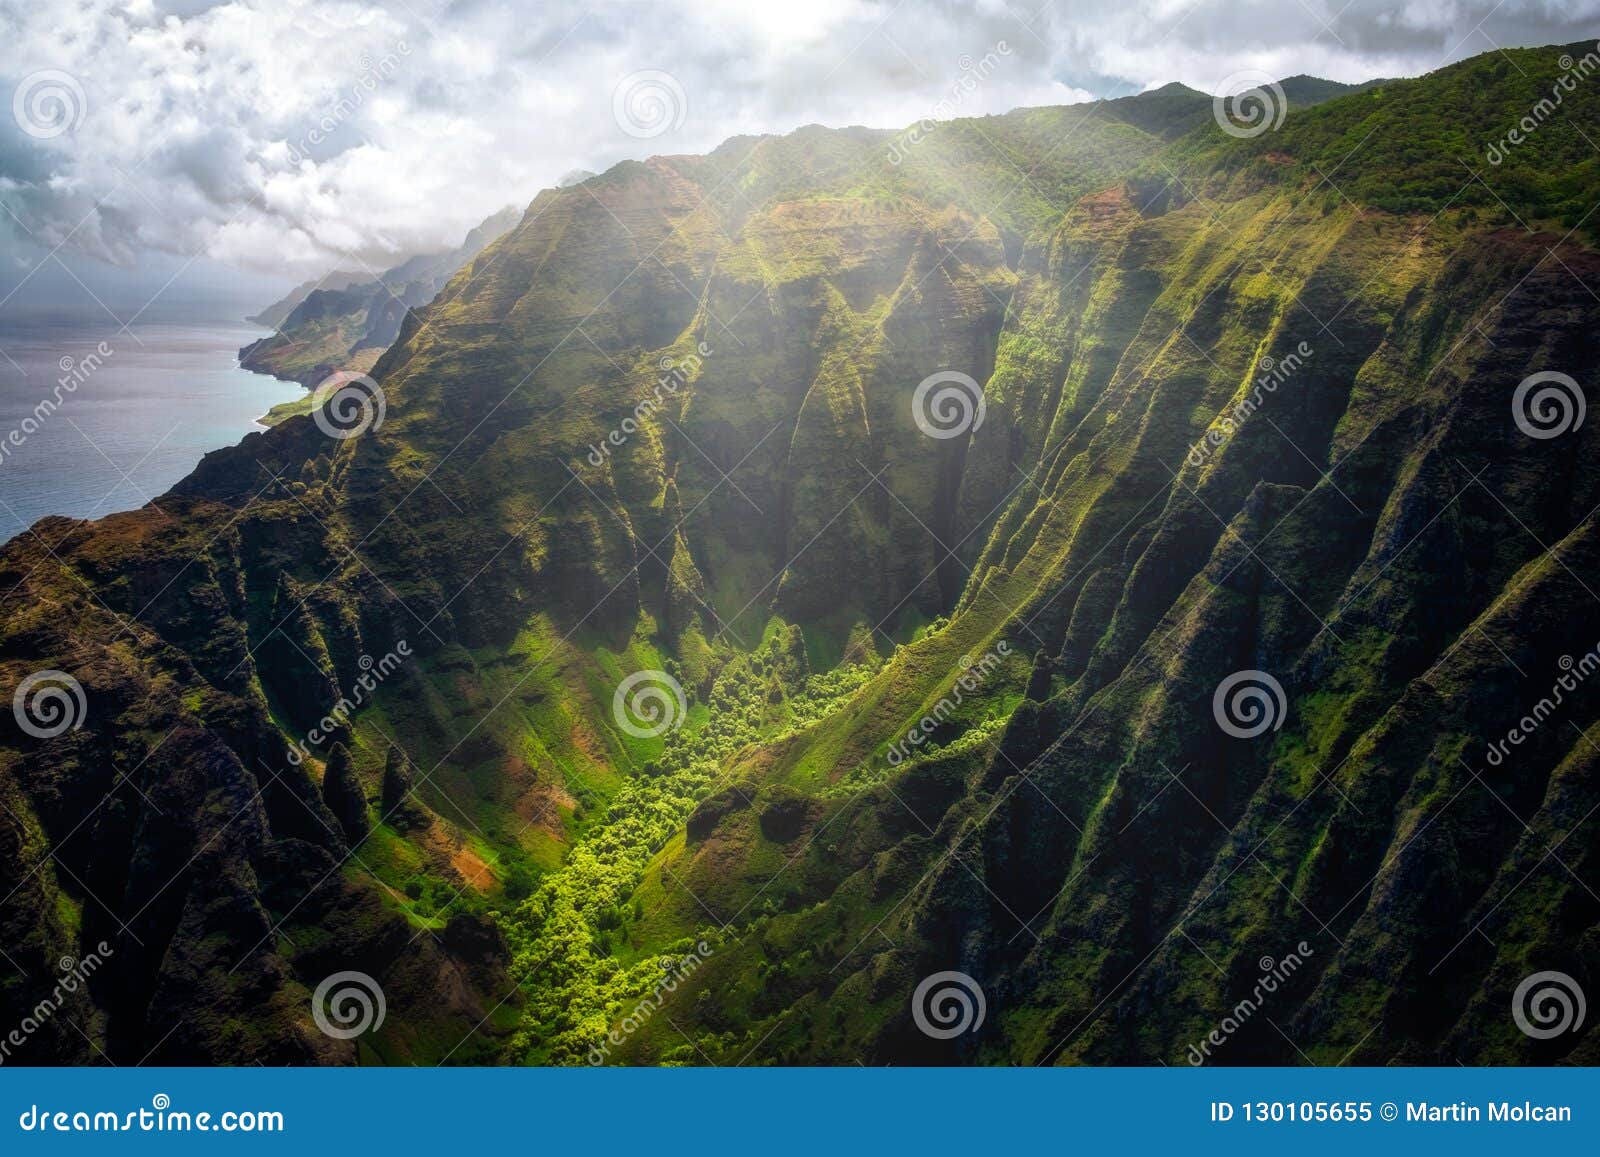 landscape view of na pali coastline cliffs with sunlight glow, kauai, hawaii